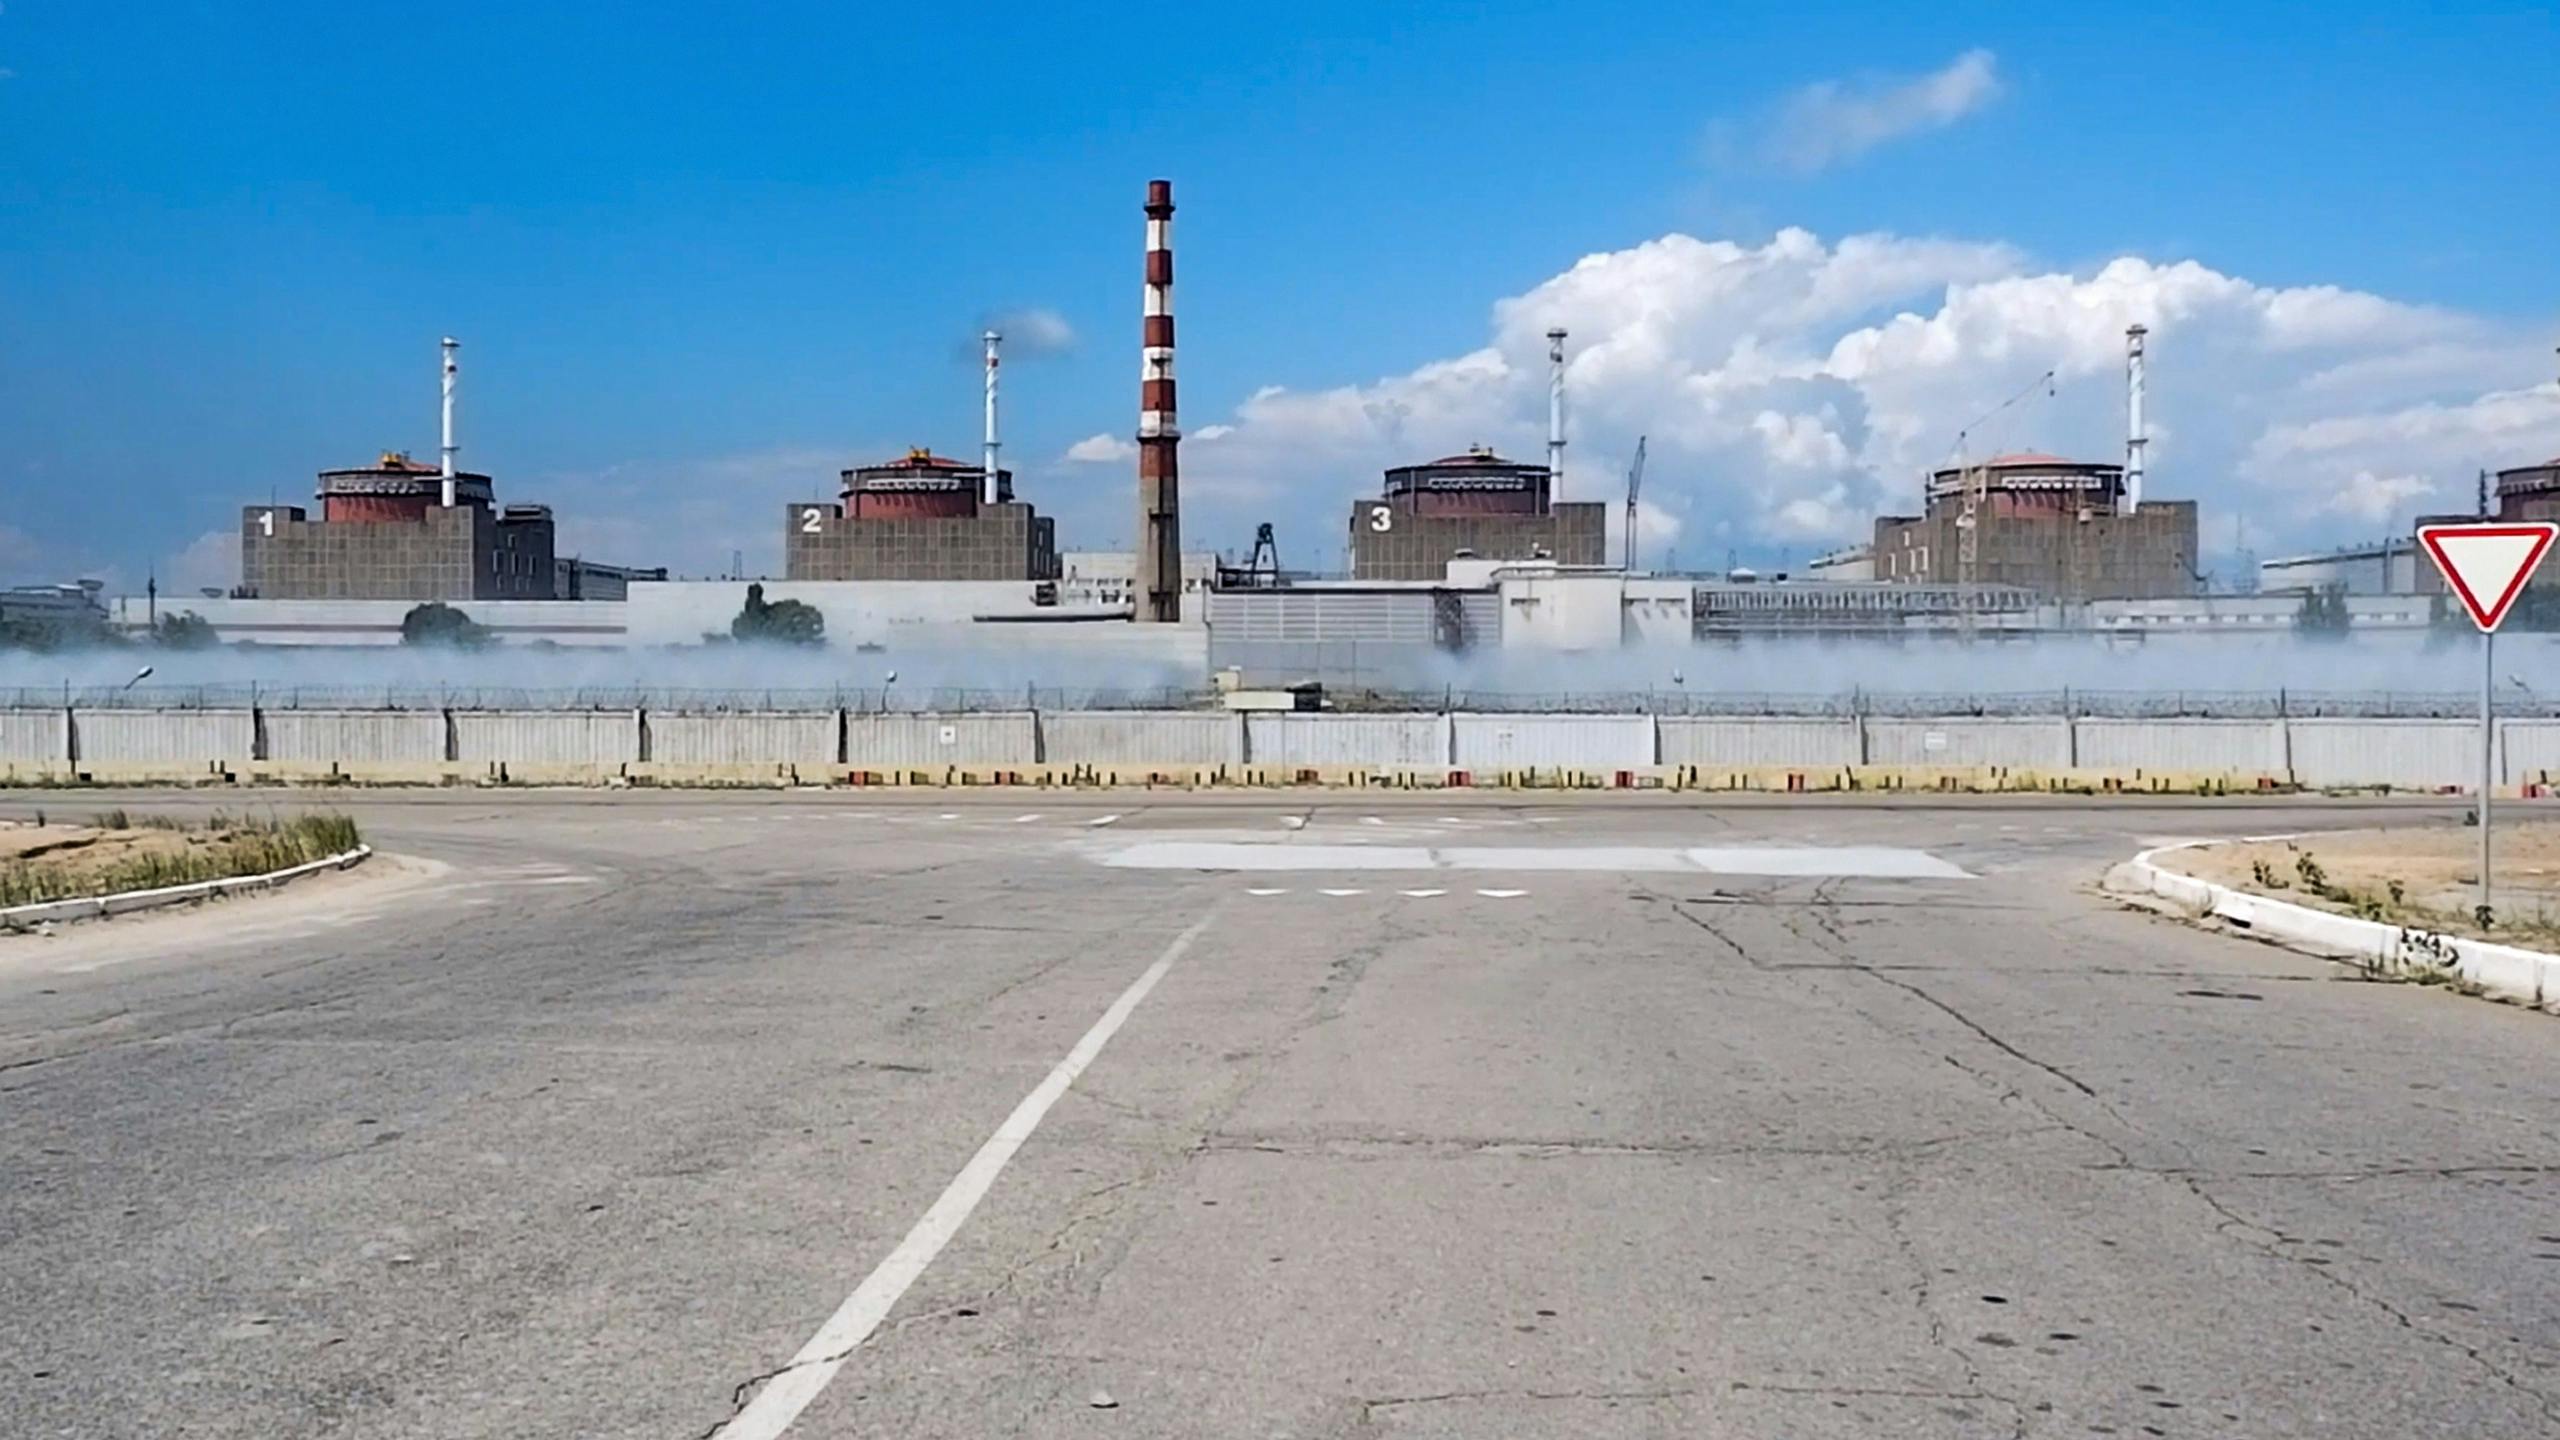 Steeds meer zorgen om bezette kerncentrale in Oekraïne: 'Kernramp reëel'